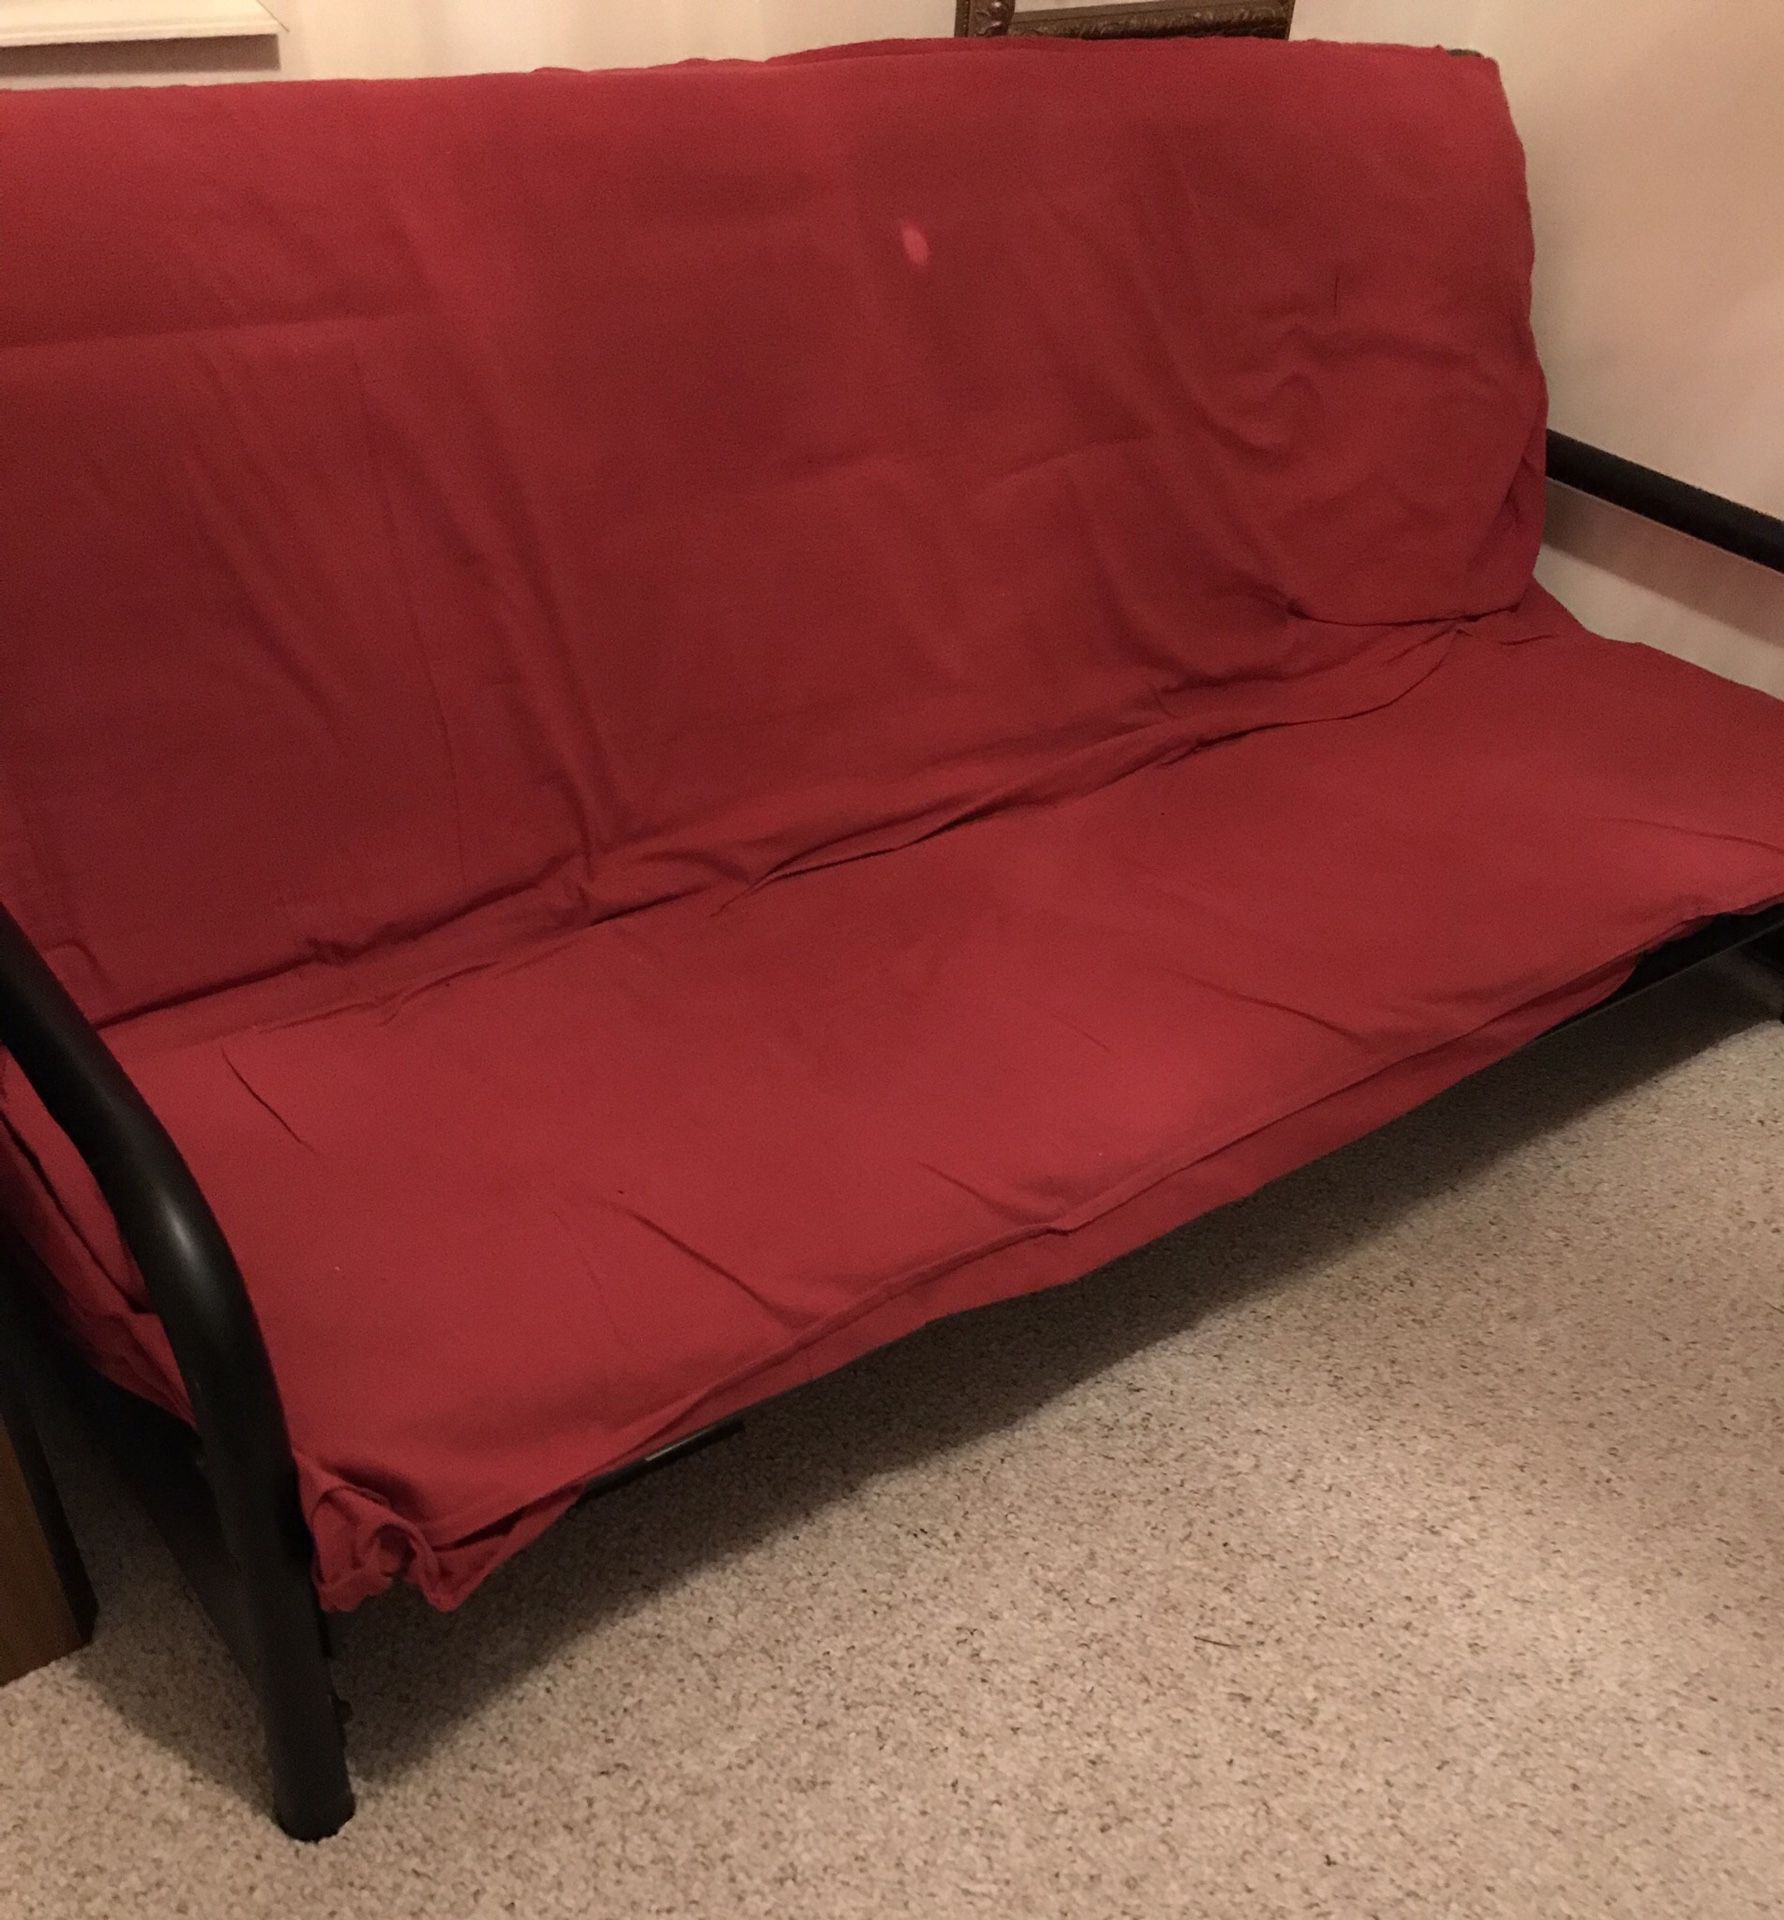 Futon bed with mattress